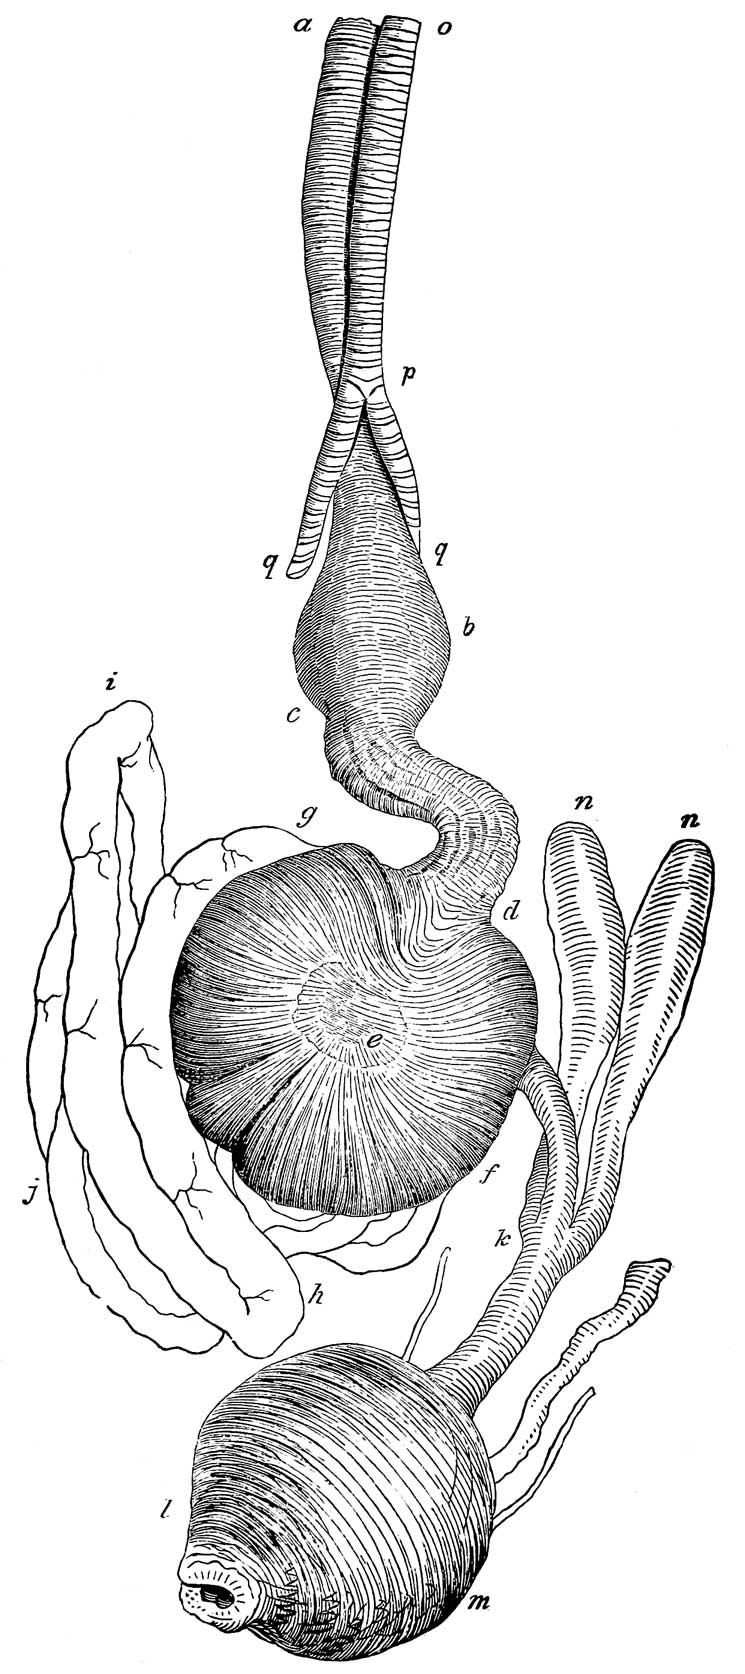 Digestive organs of <i>Aramus scolopaceus</i>